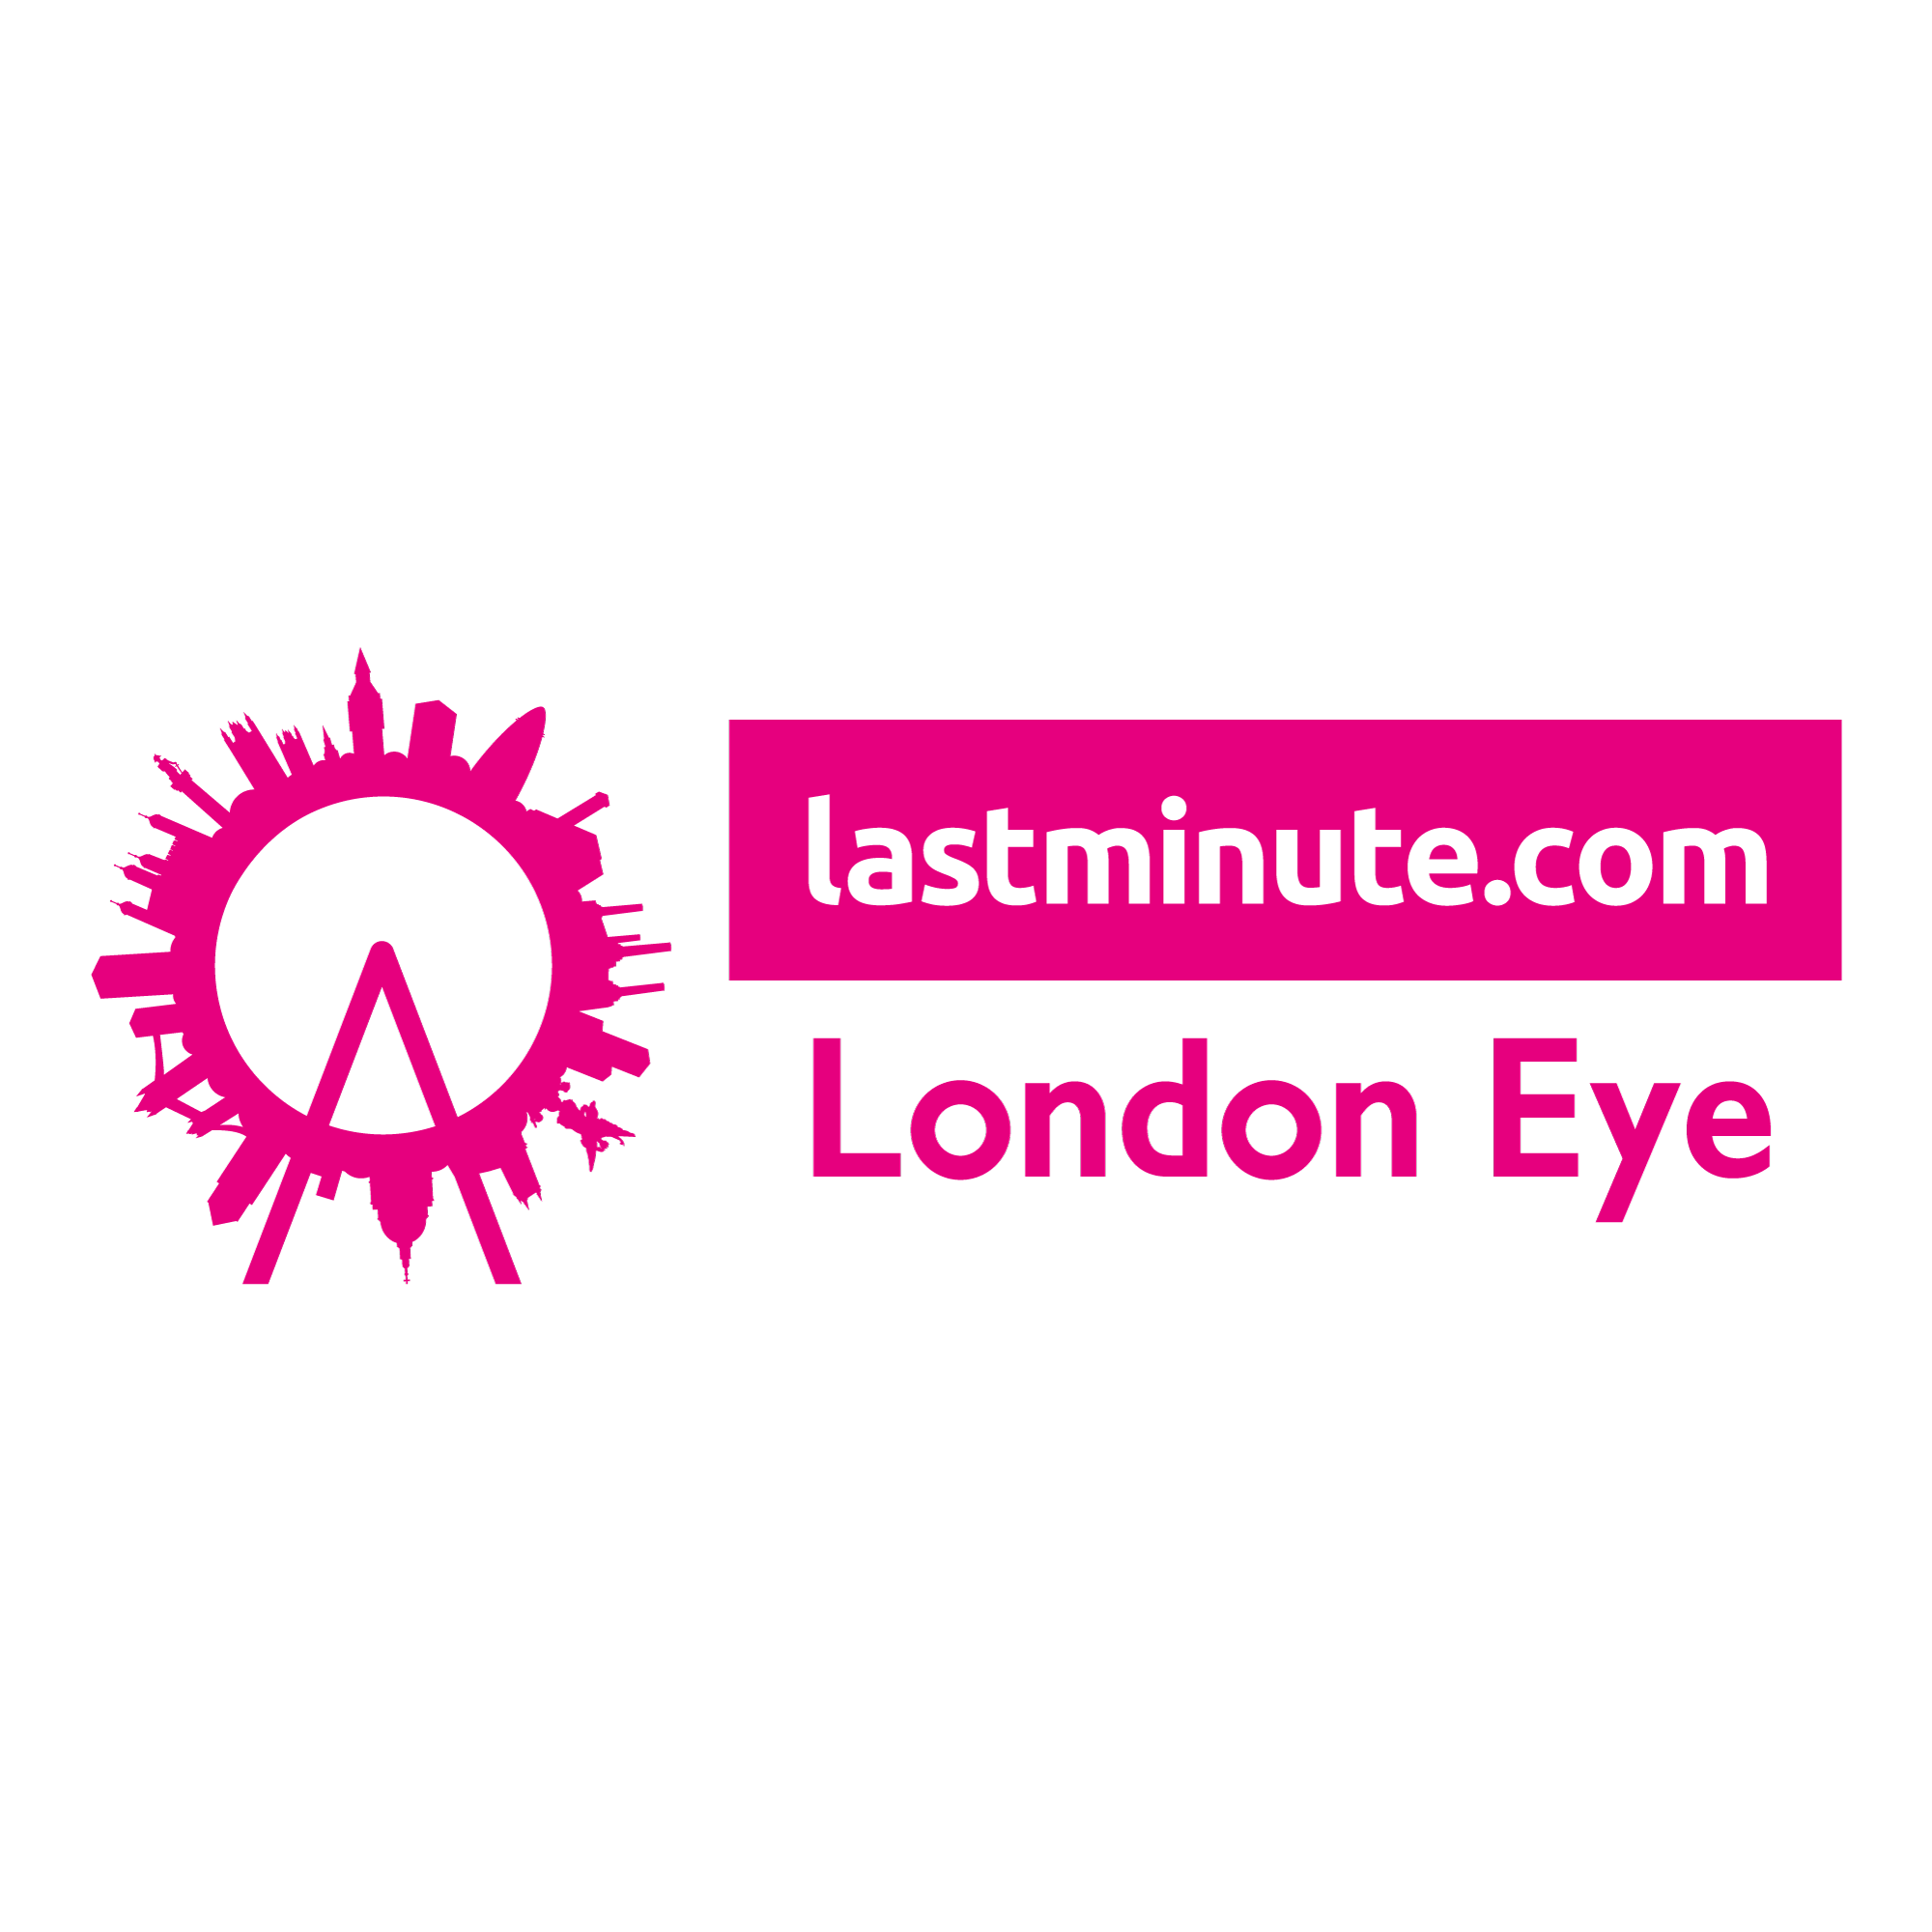 Lastminute.com London Eye Logo PINK lastminute.com London Eye London 020 7967 8021